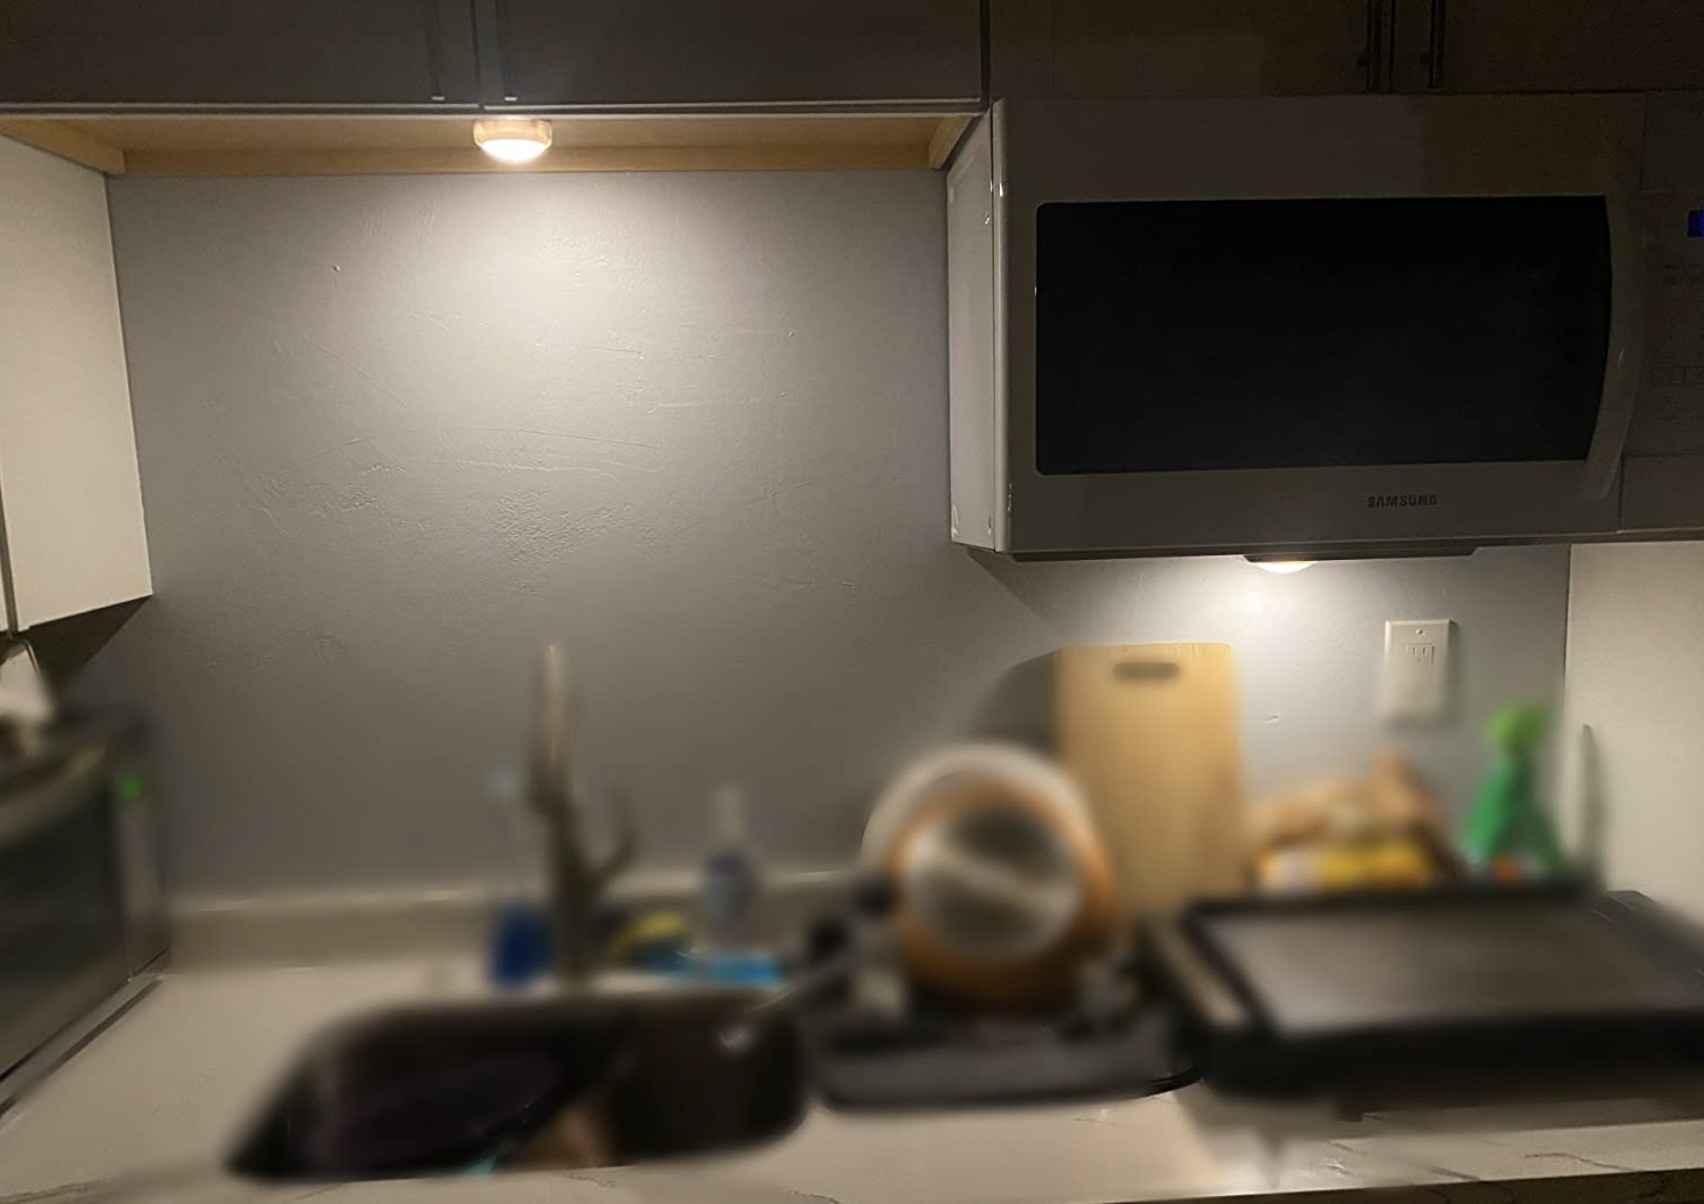 a puck light above a sink in a kitchen